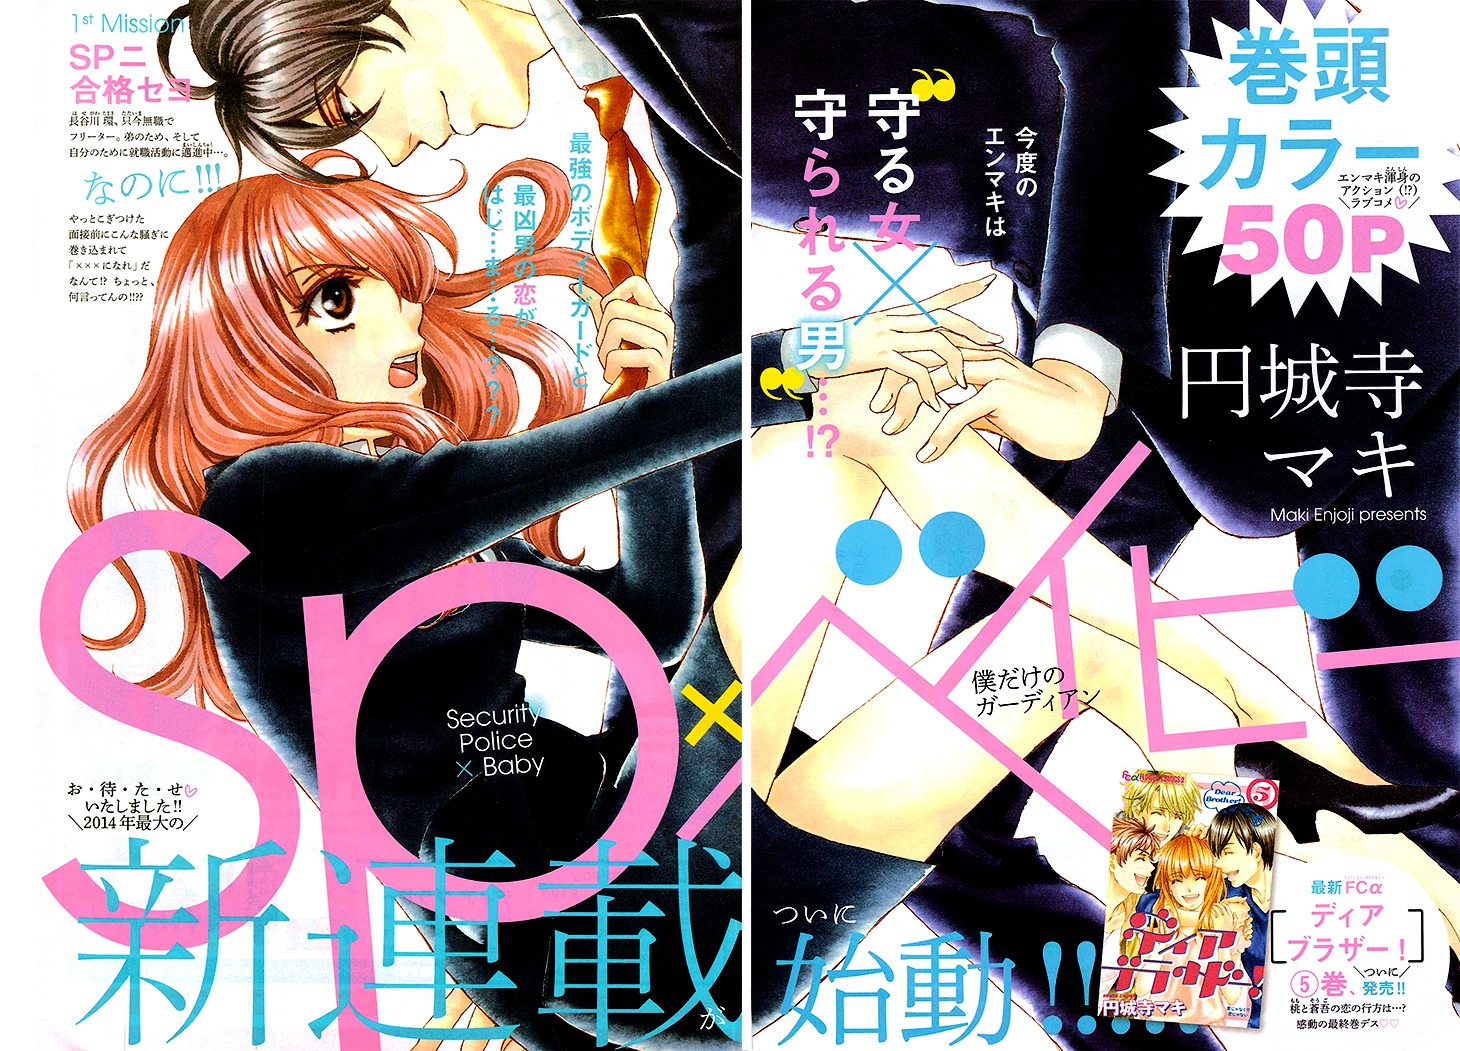 Viz Media Launches New Shojo Manga Series Sp Baby